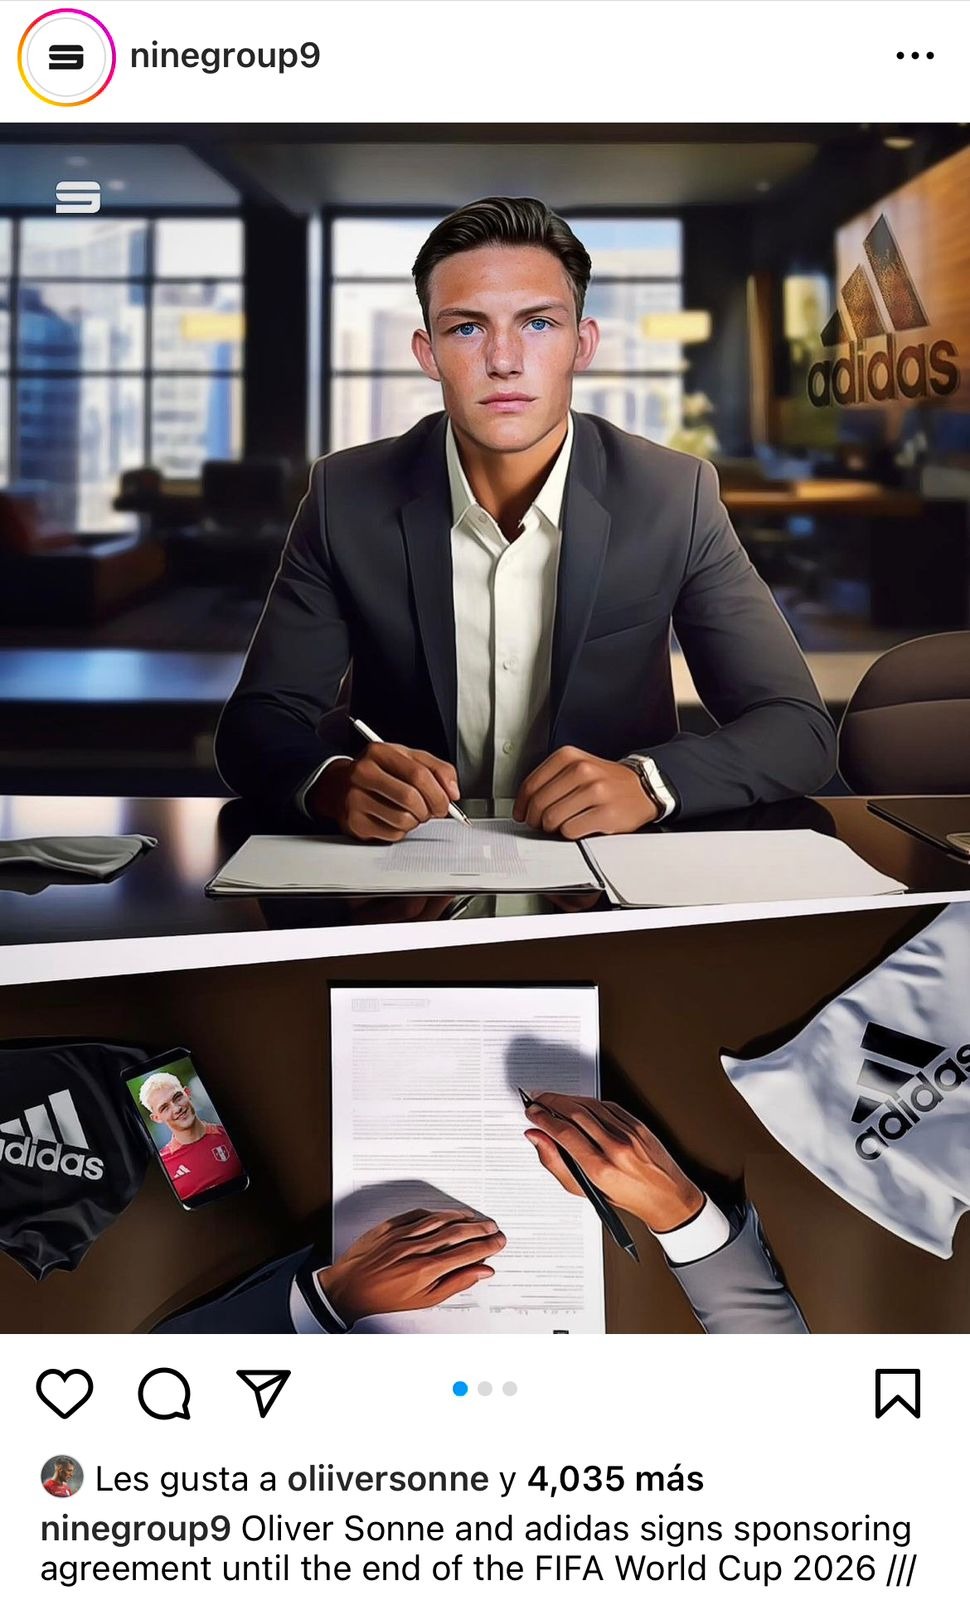 Oliver Sonne firmó contrato con Adidas. | Fuente: @ninegroup9